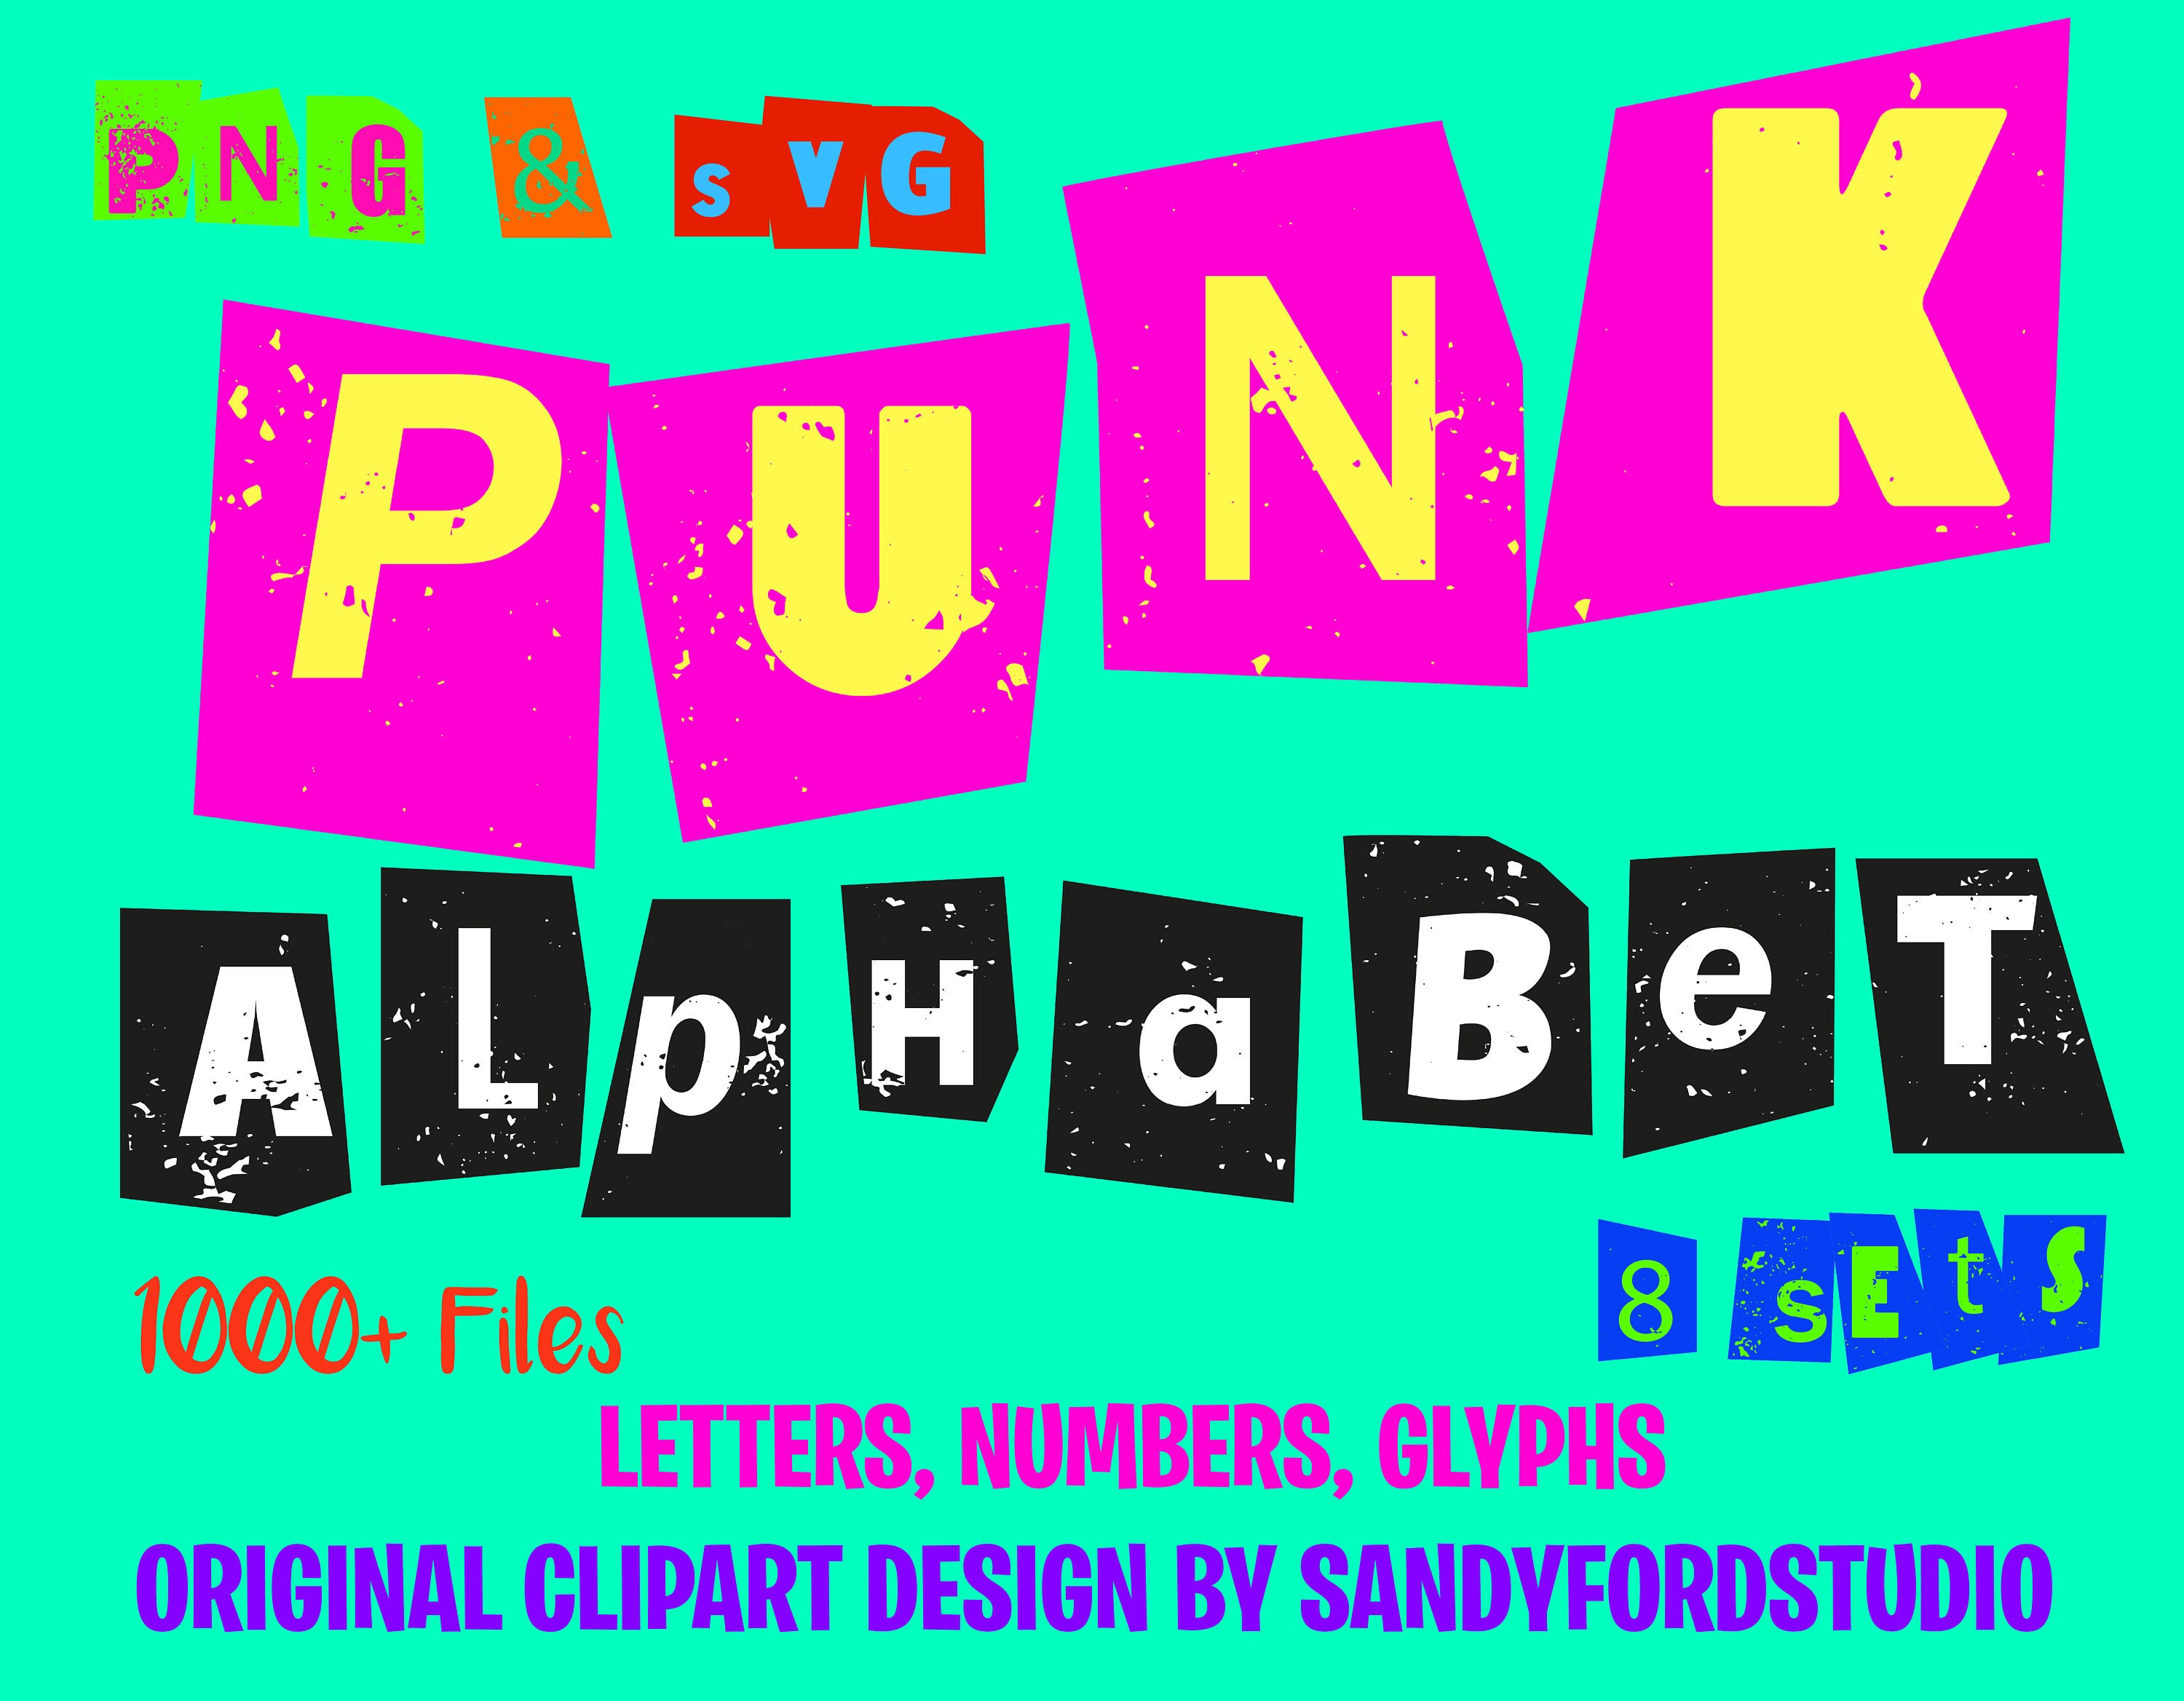 22 Solarpunk Farm Clipart PNG Solar Punk Home (Download Now) 